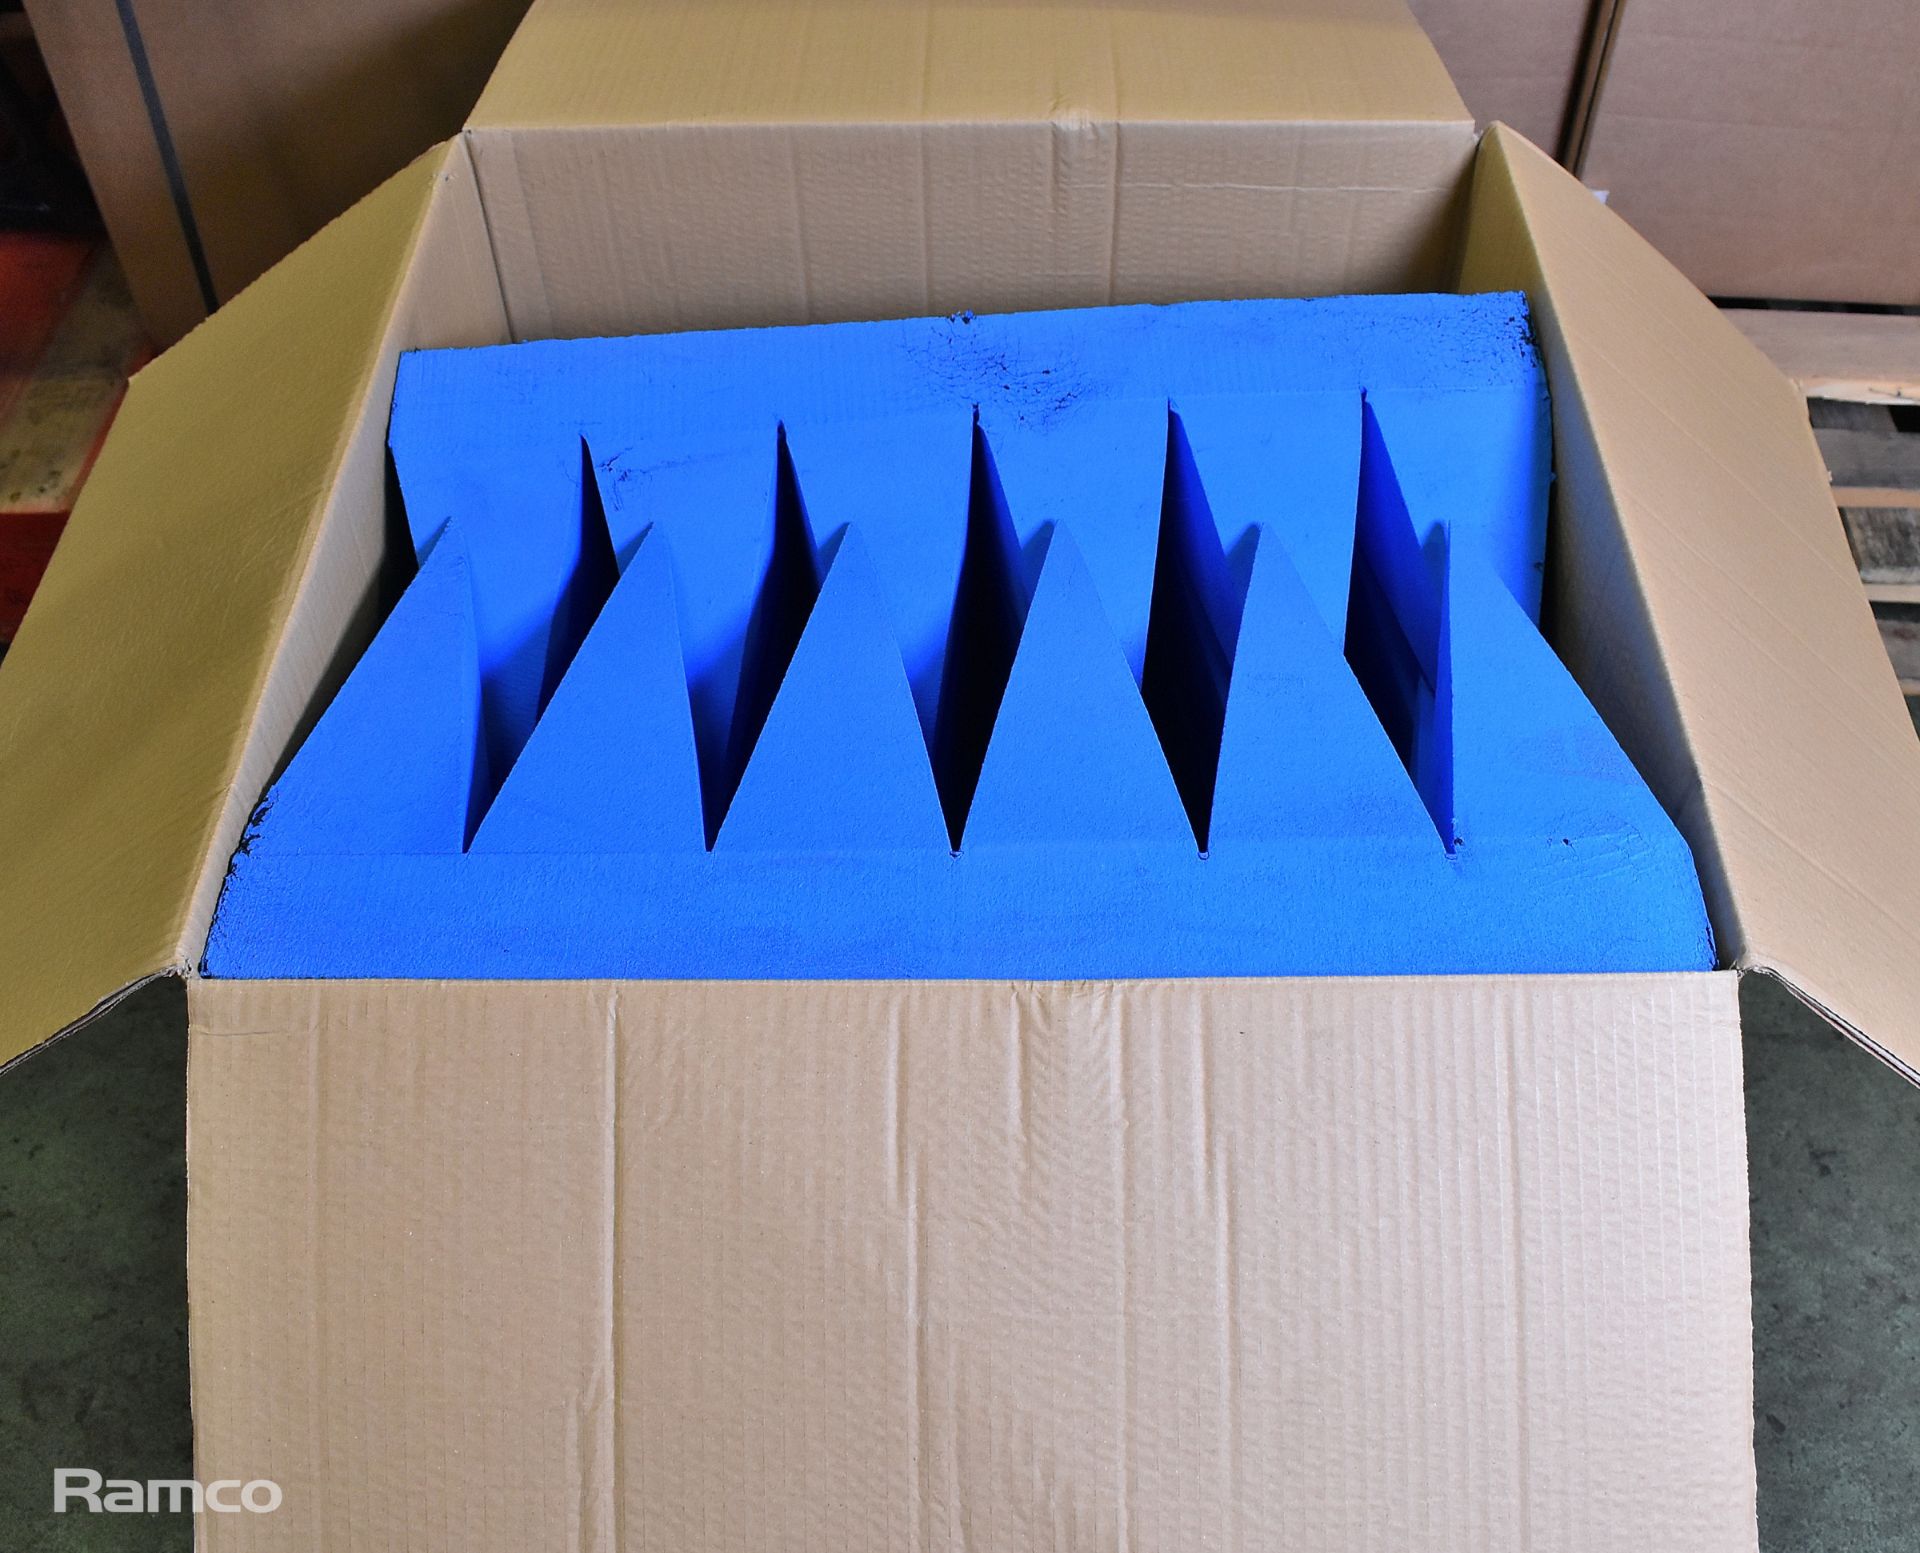 Anechoic Sound reducing foam panels - triangular prism design - 4 boxes - 2 panels per box - Image 4 of 4